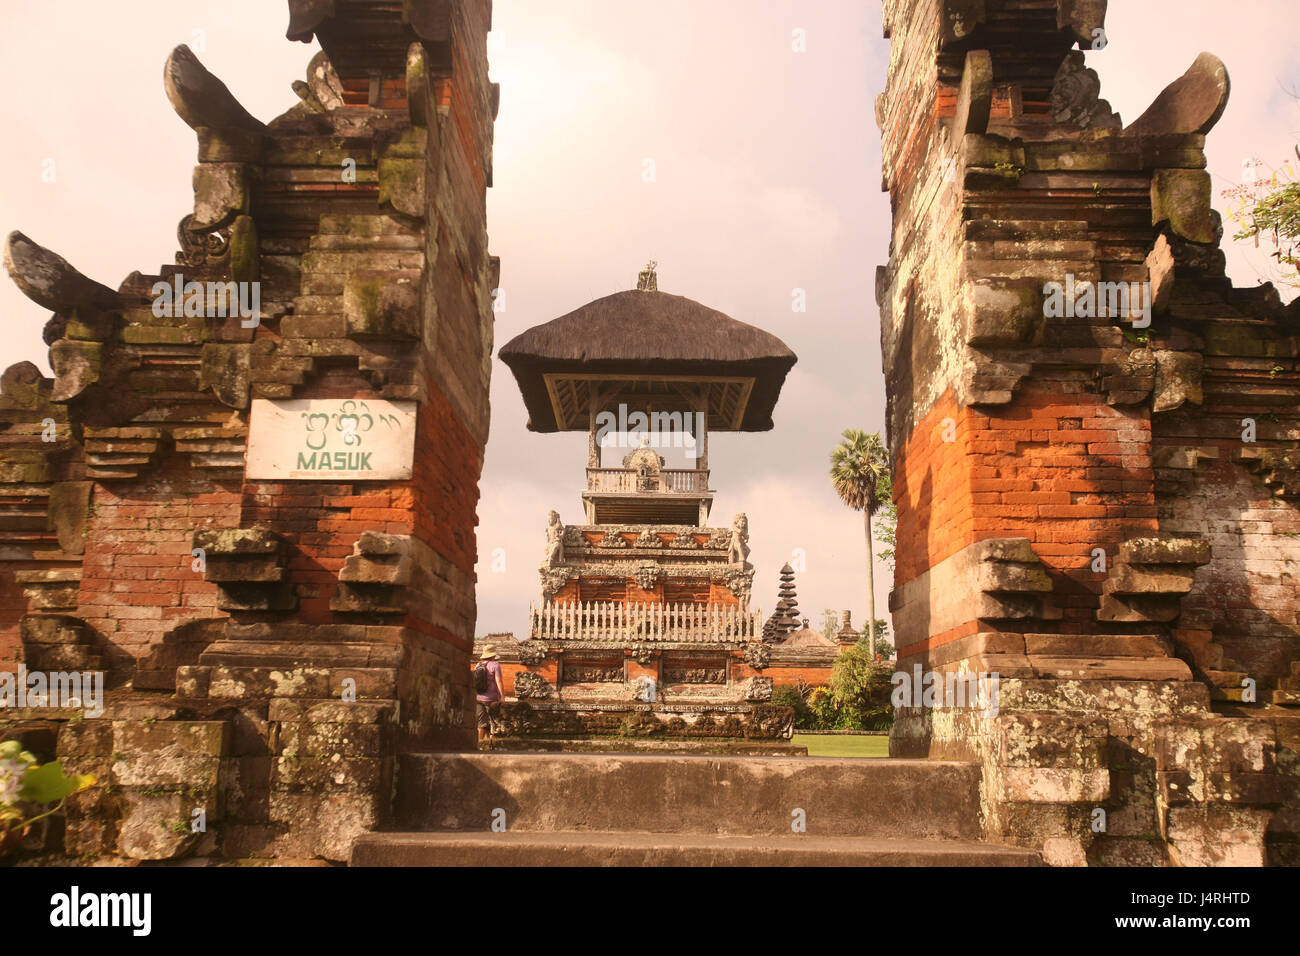 Indonesia, Bali, island, Batukau, Pura Luhur Batukau, temple, culture, architecture, temple, Stock Photo